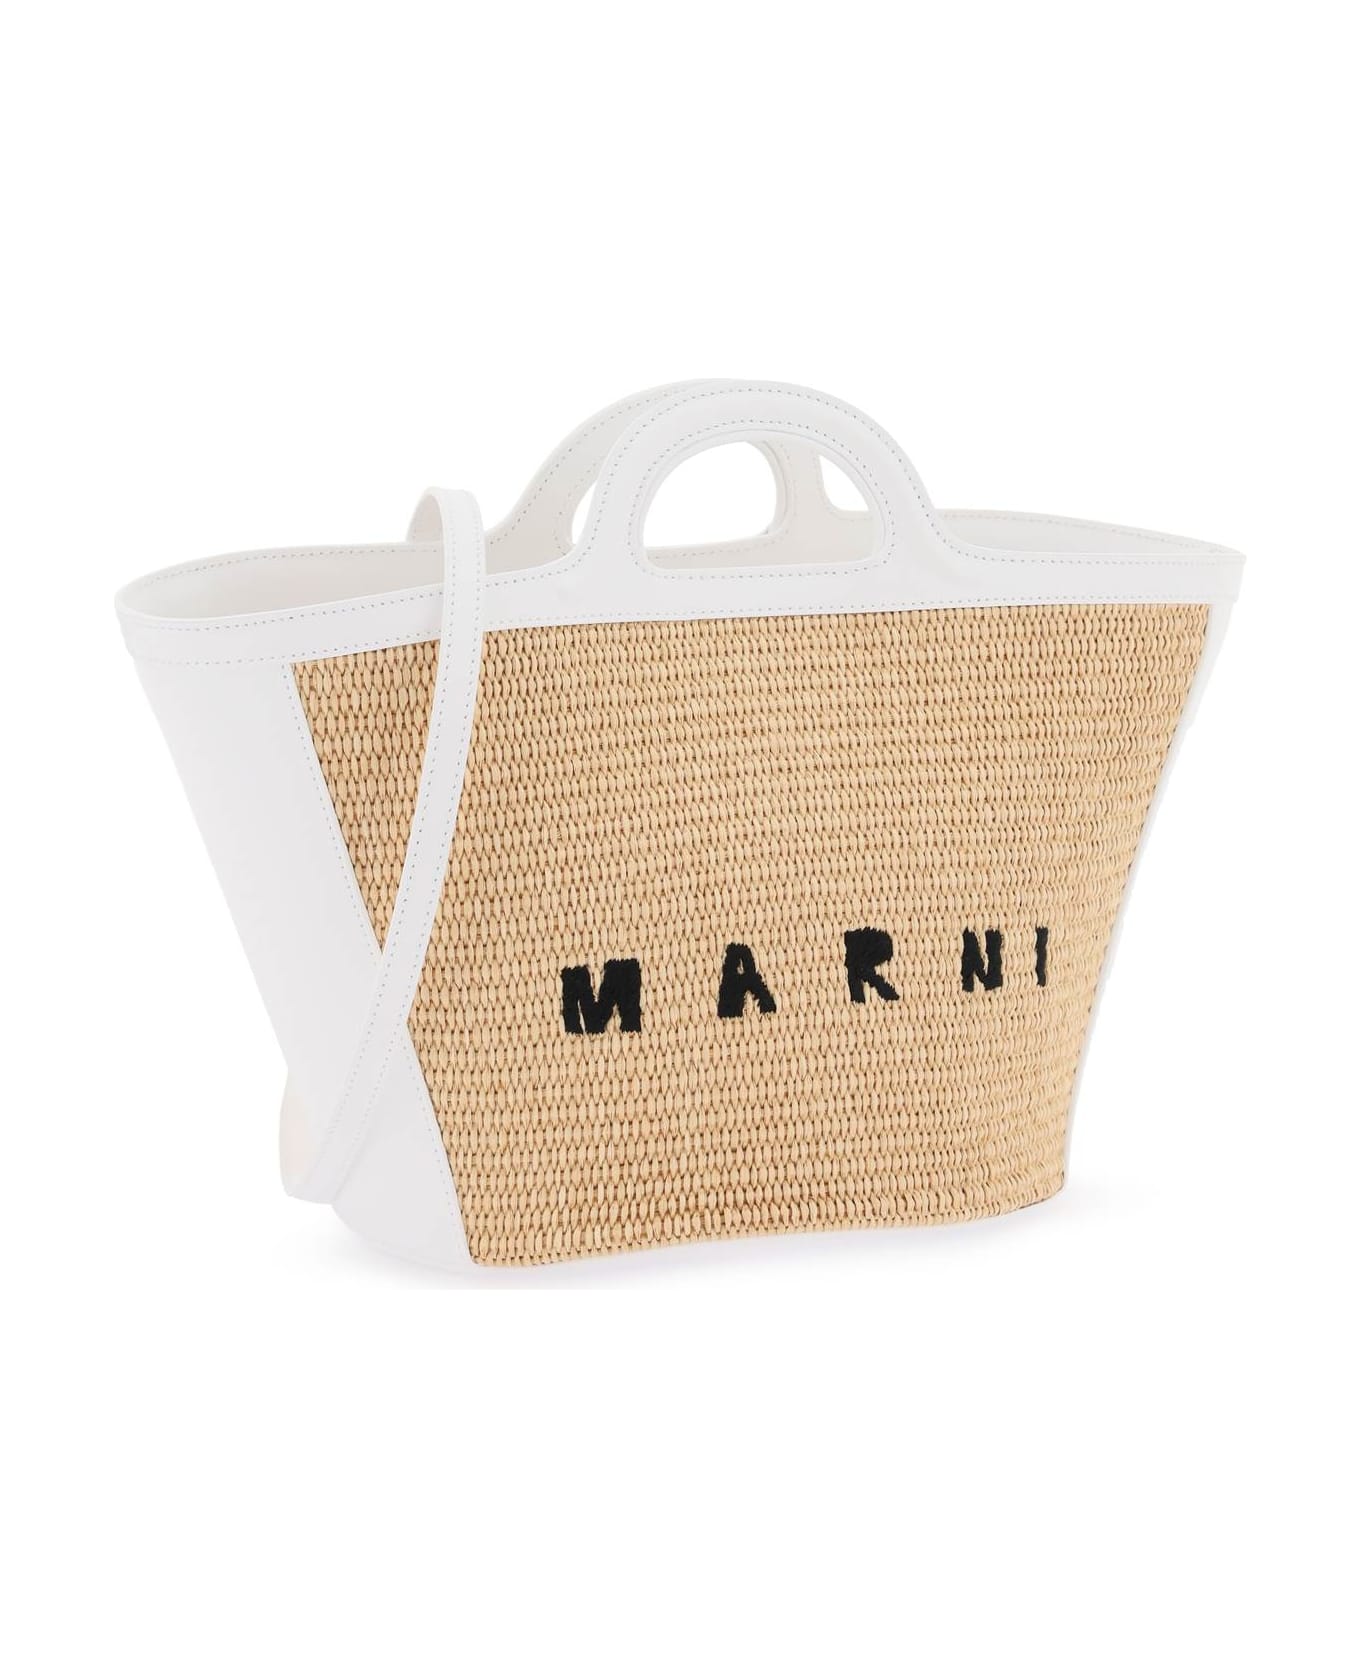 Marni Small Tropicalia Summer Bag In White Leather And Natural Raffia - White/beige